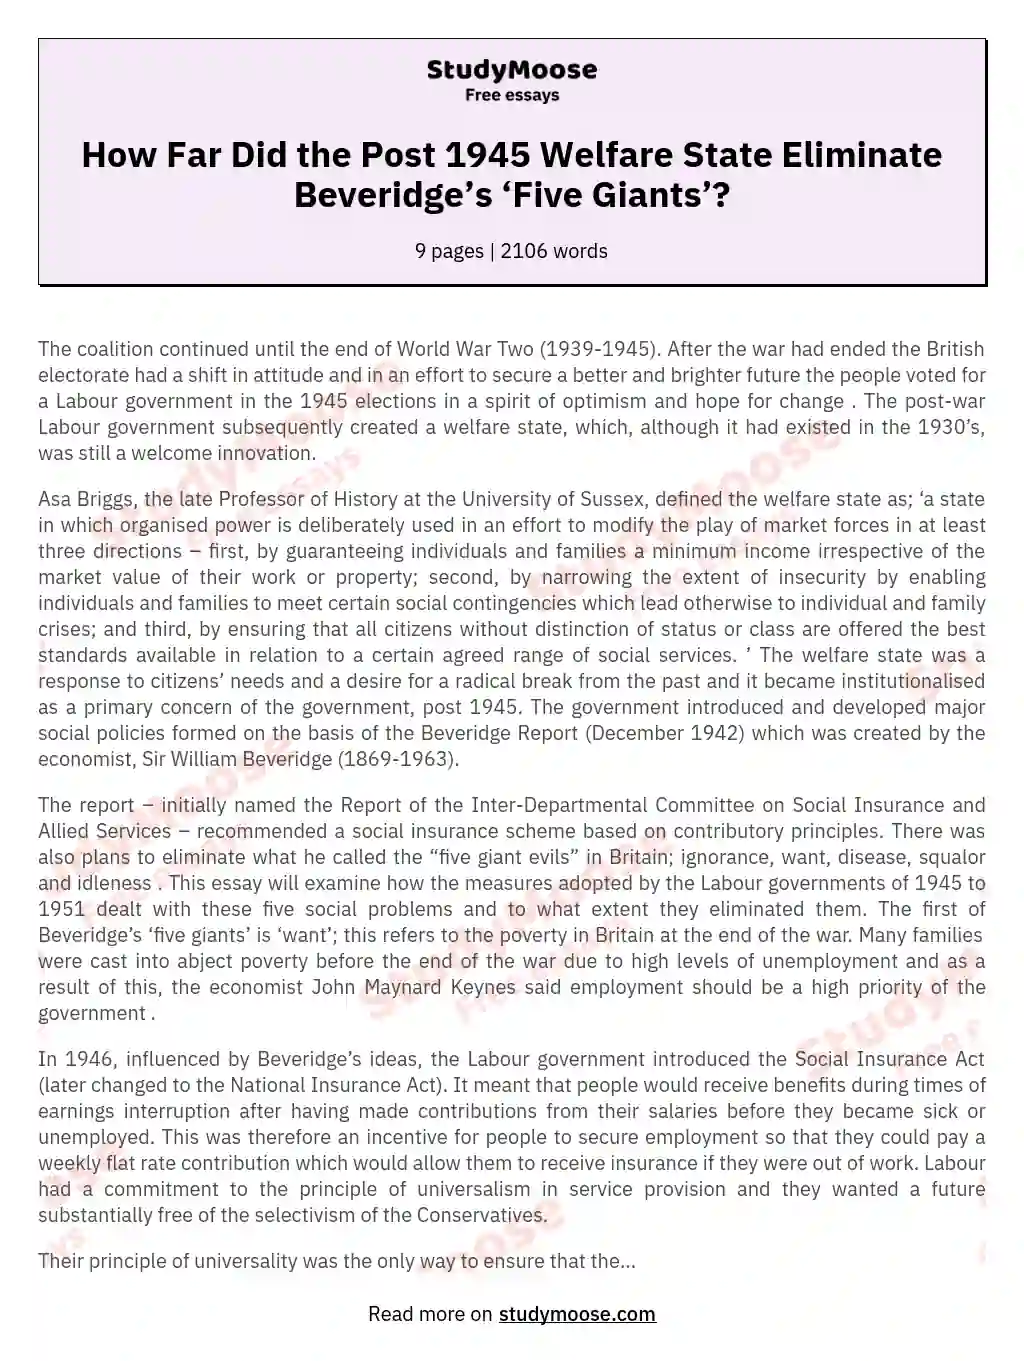 How Far Did the Post 1945 Welfare State Eliminate Beveridge’s ‘Five Giants’?